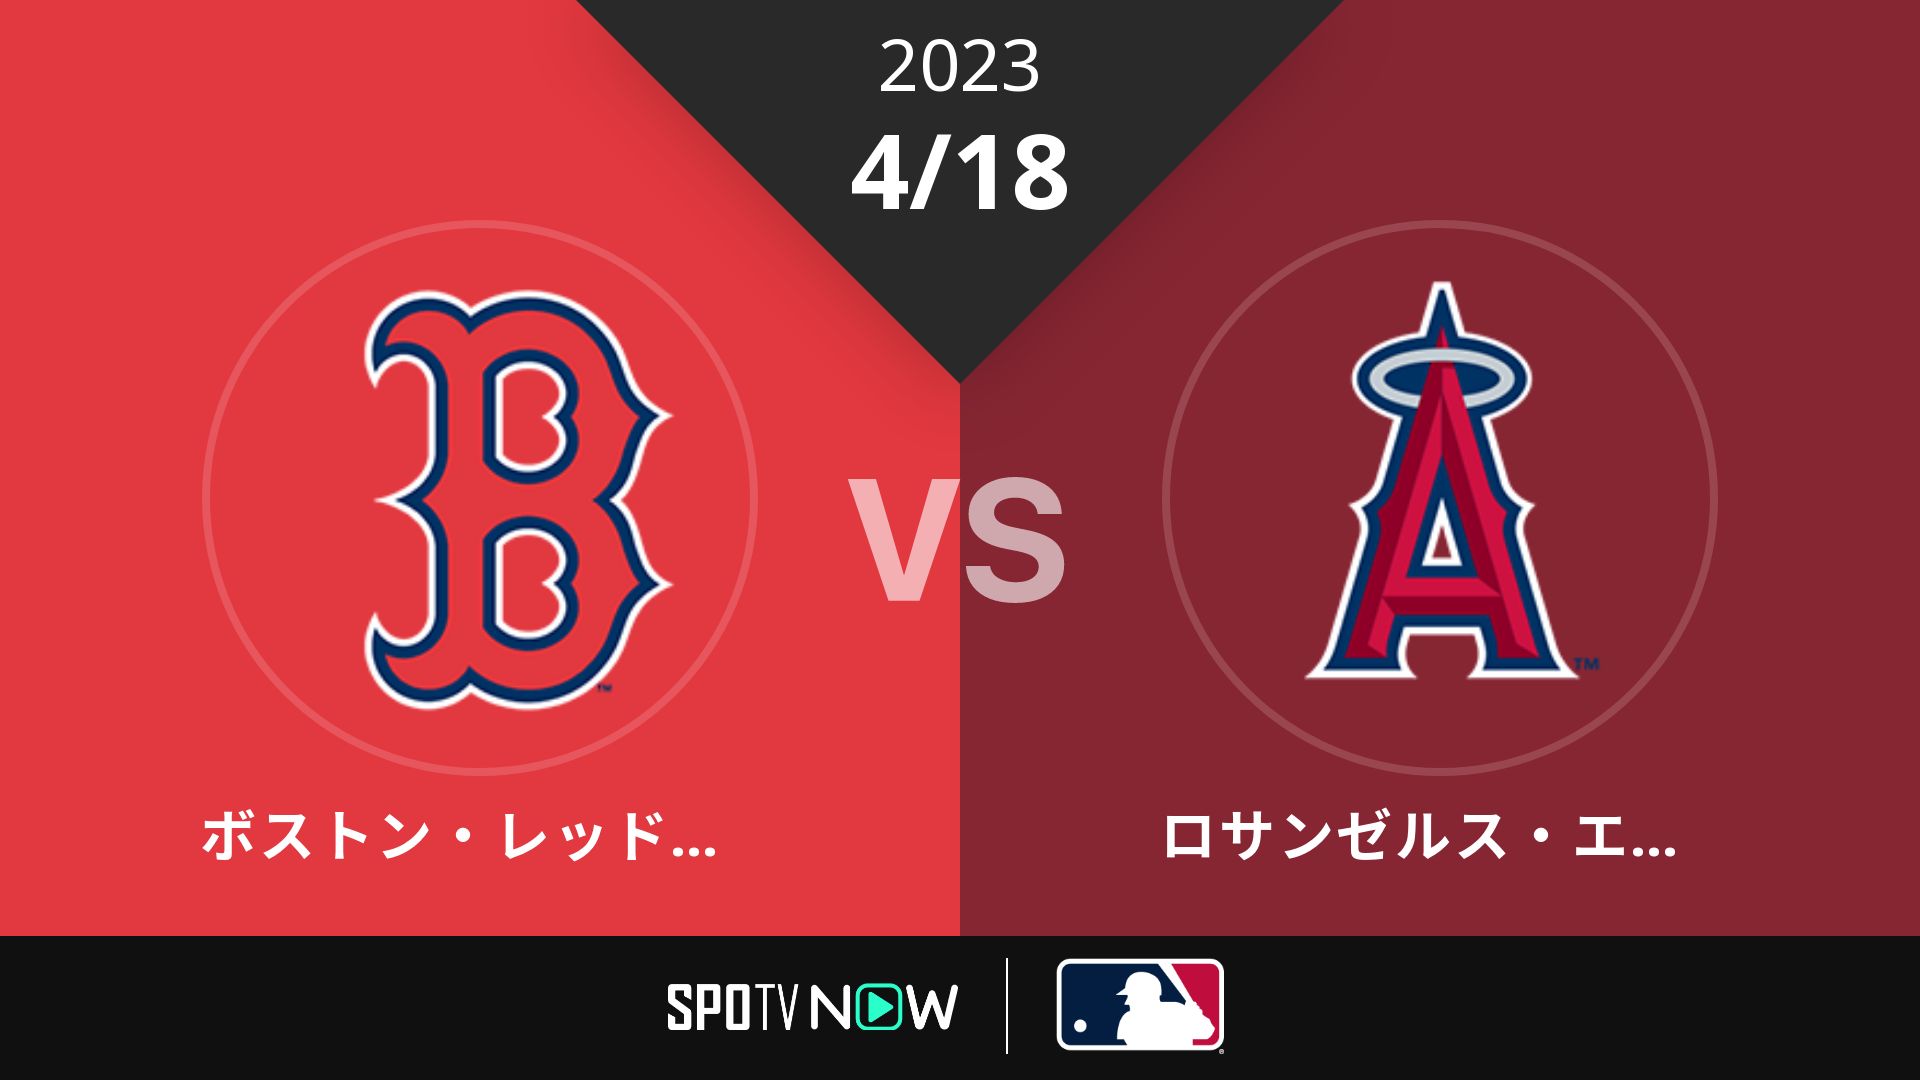 2023/4/18 Rソックス vs エンゼルス [MLB]